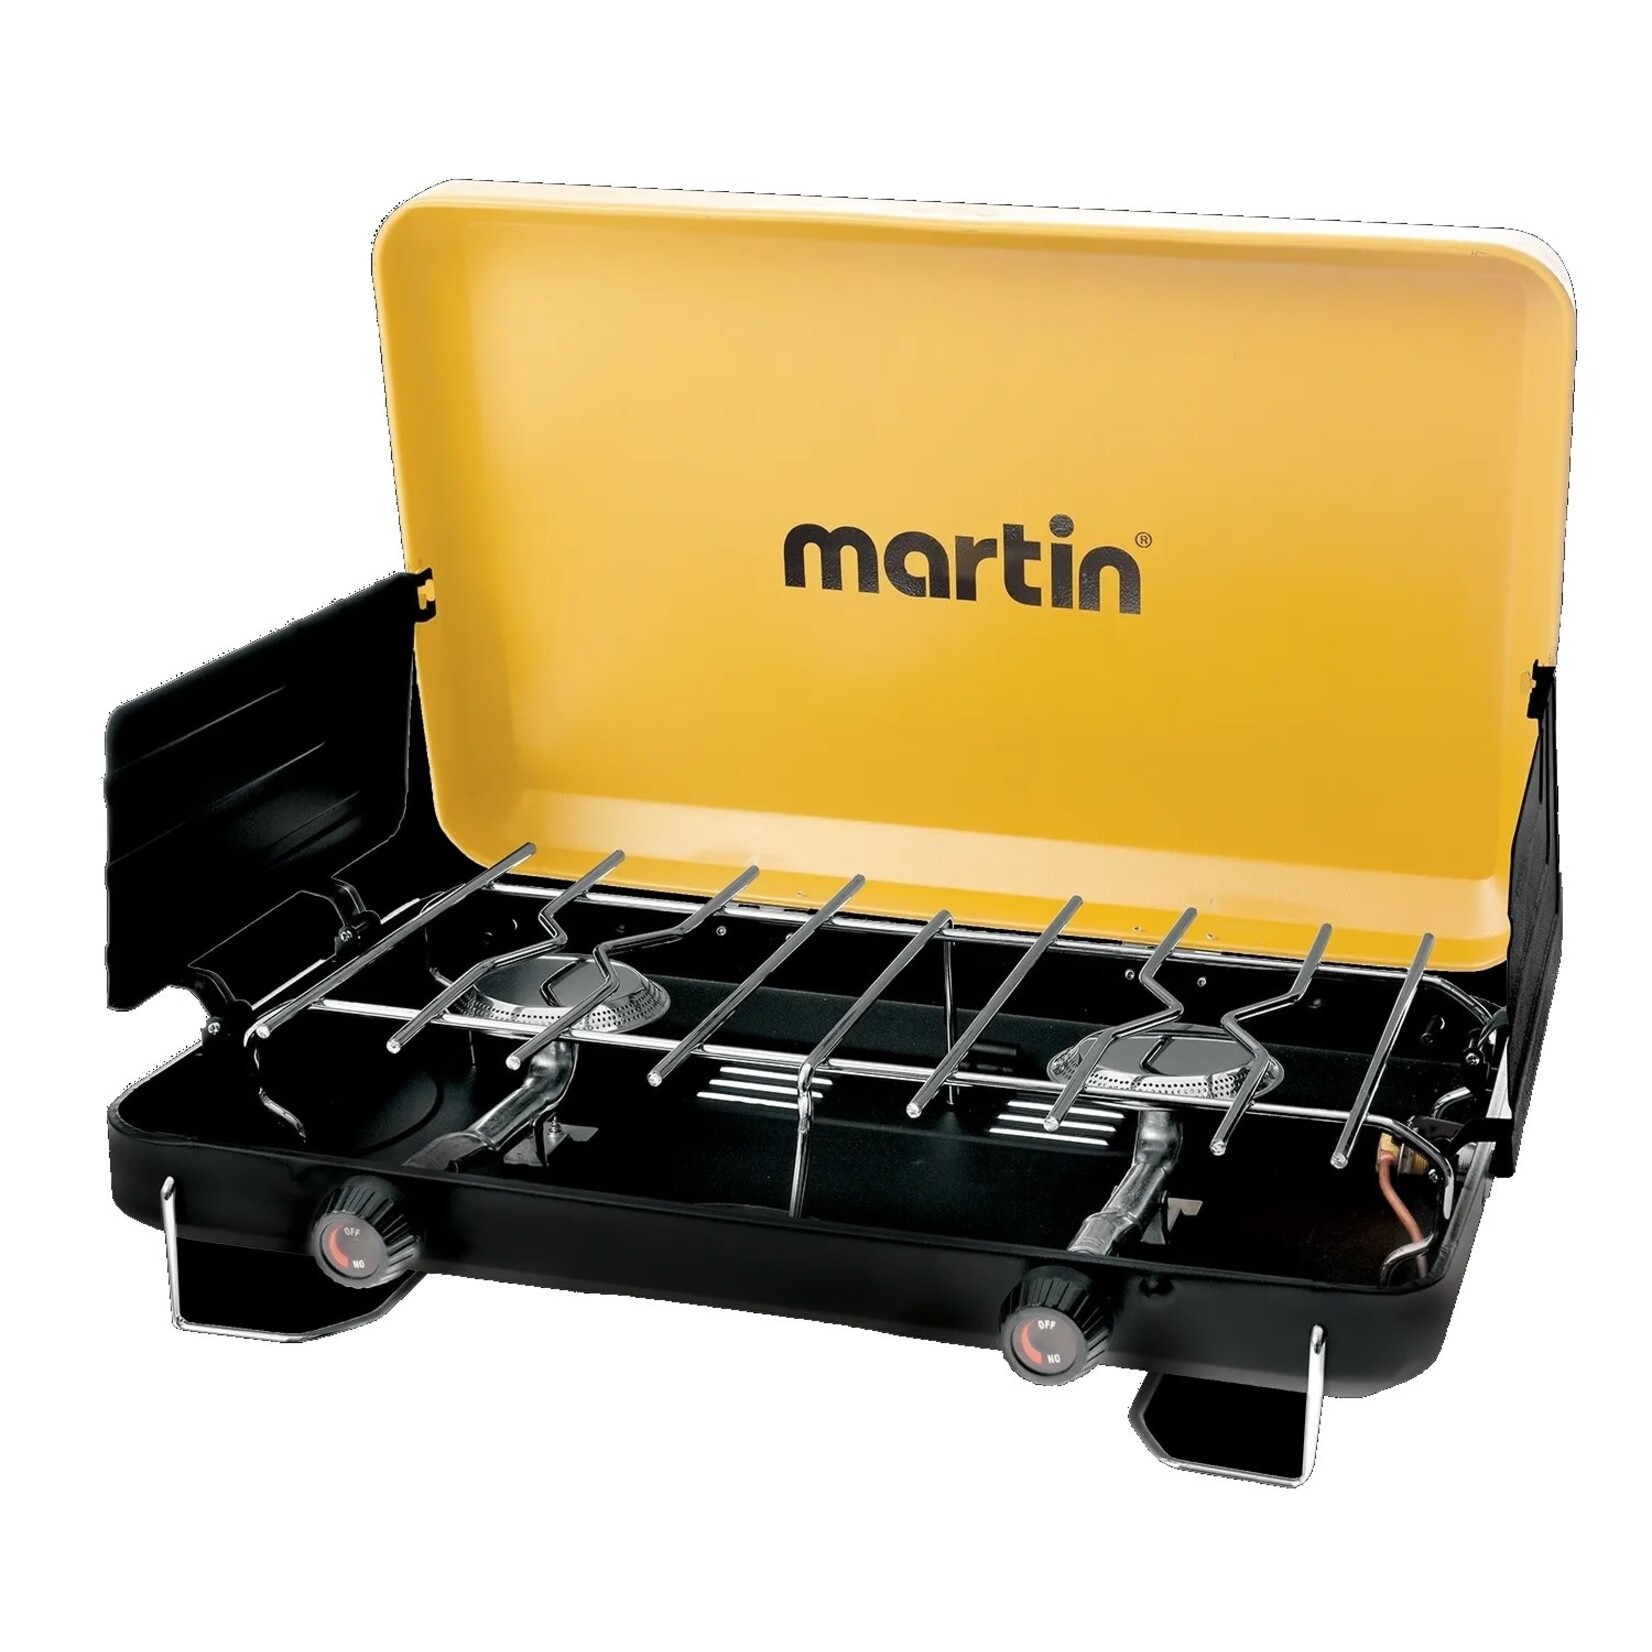 MARTIN Poêle Martin Mcs200 Au Propane 20000 Btu